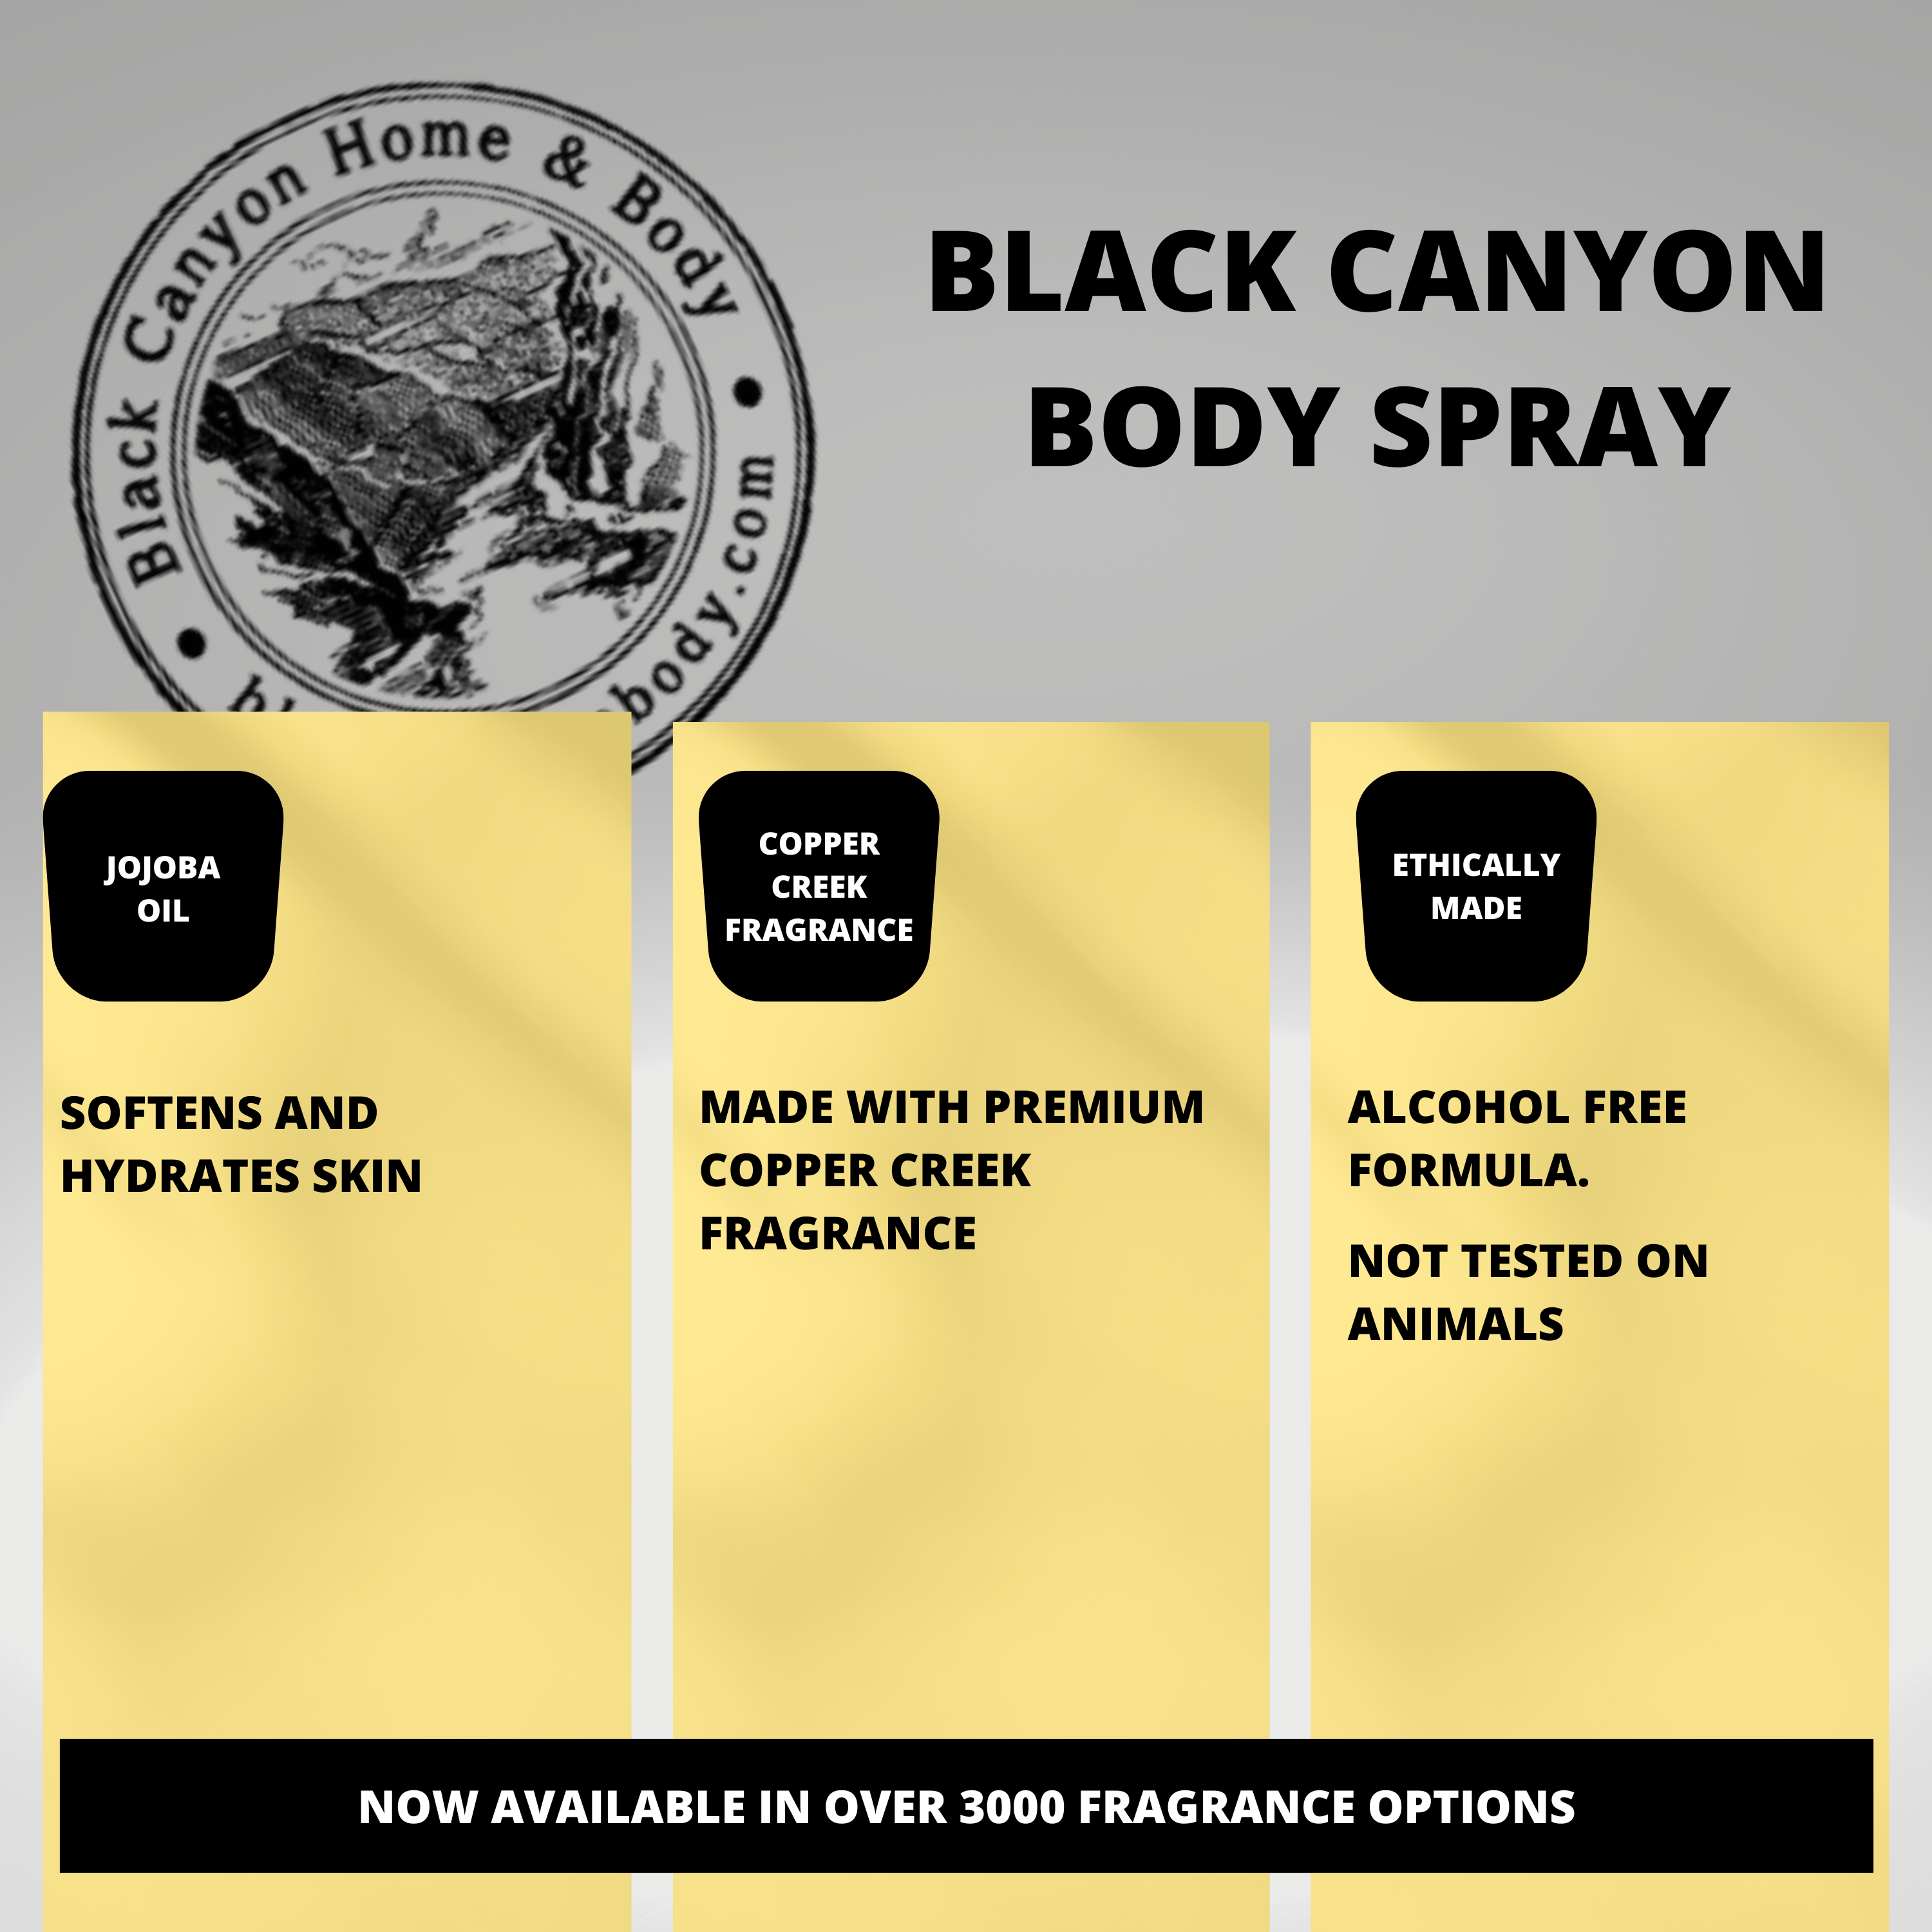 Black Canyon Amber Clove Nutmeg Scented Body Spray